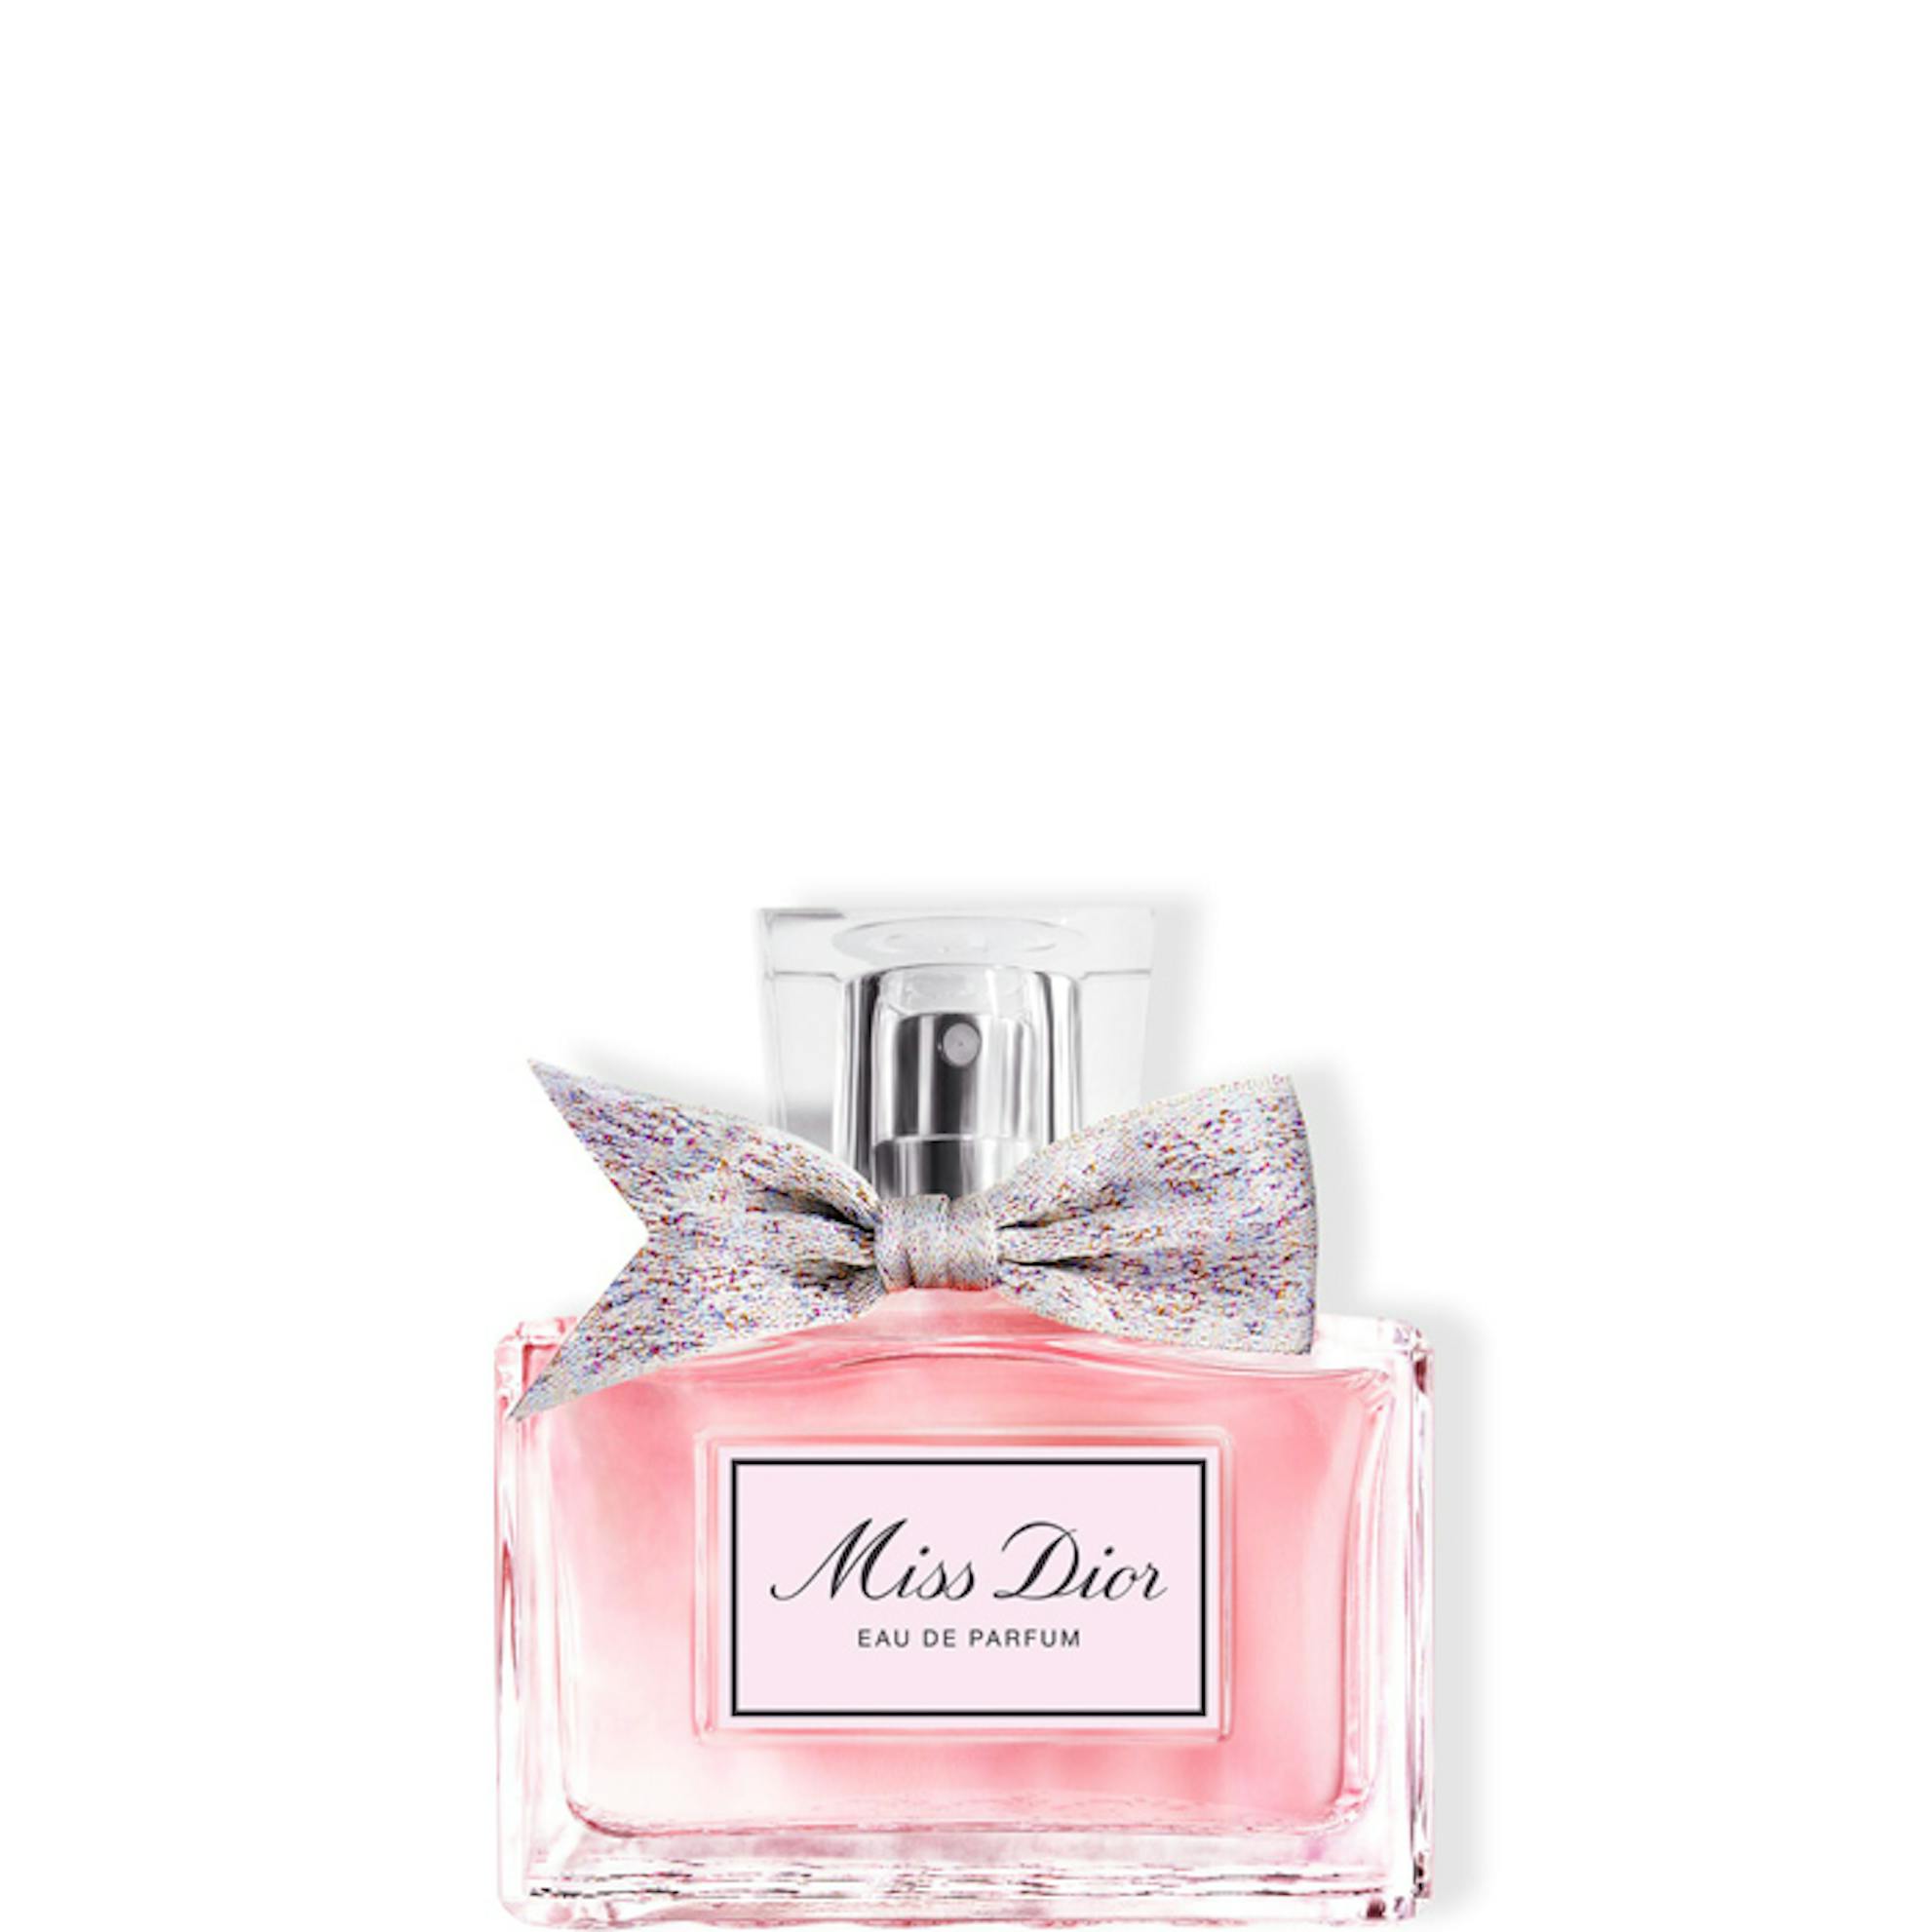 Dior, Miss Dior Eau de Parfum: Review